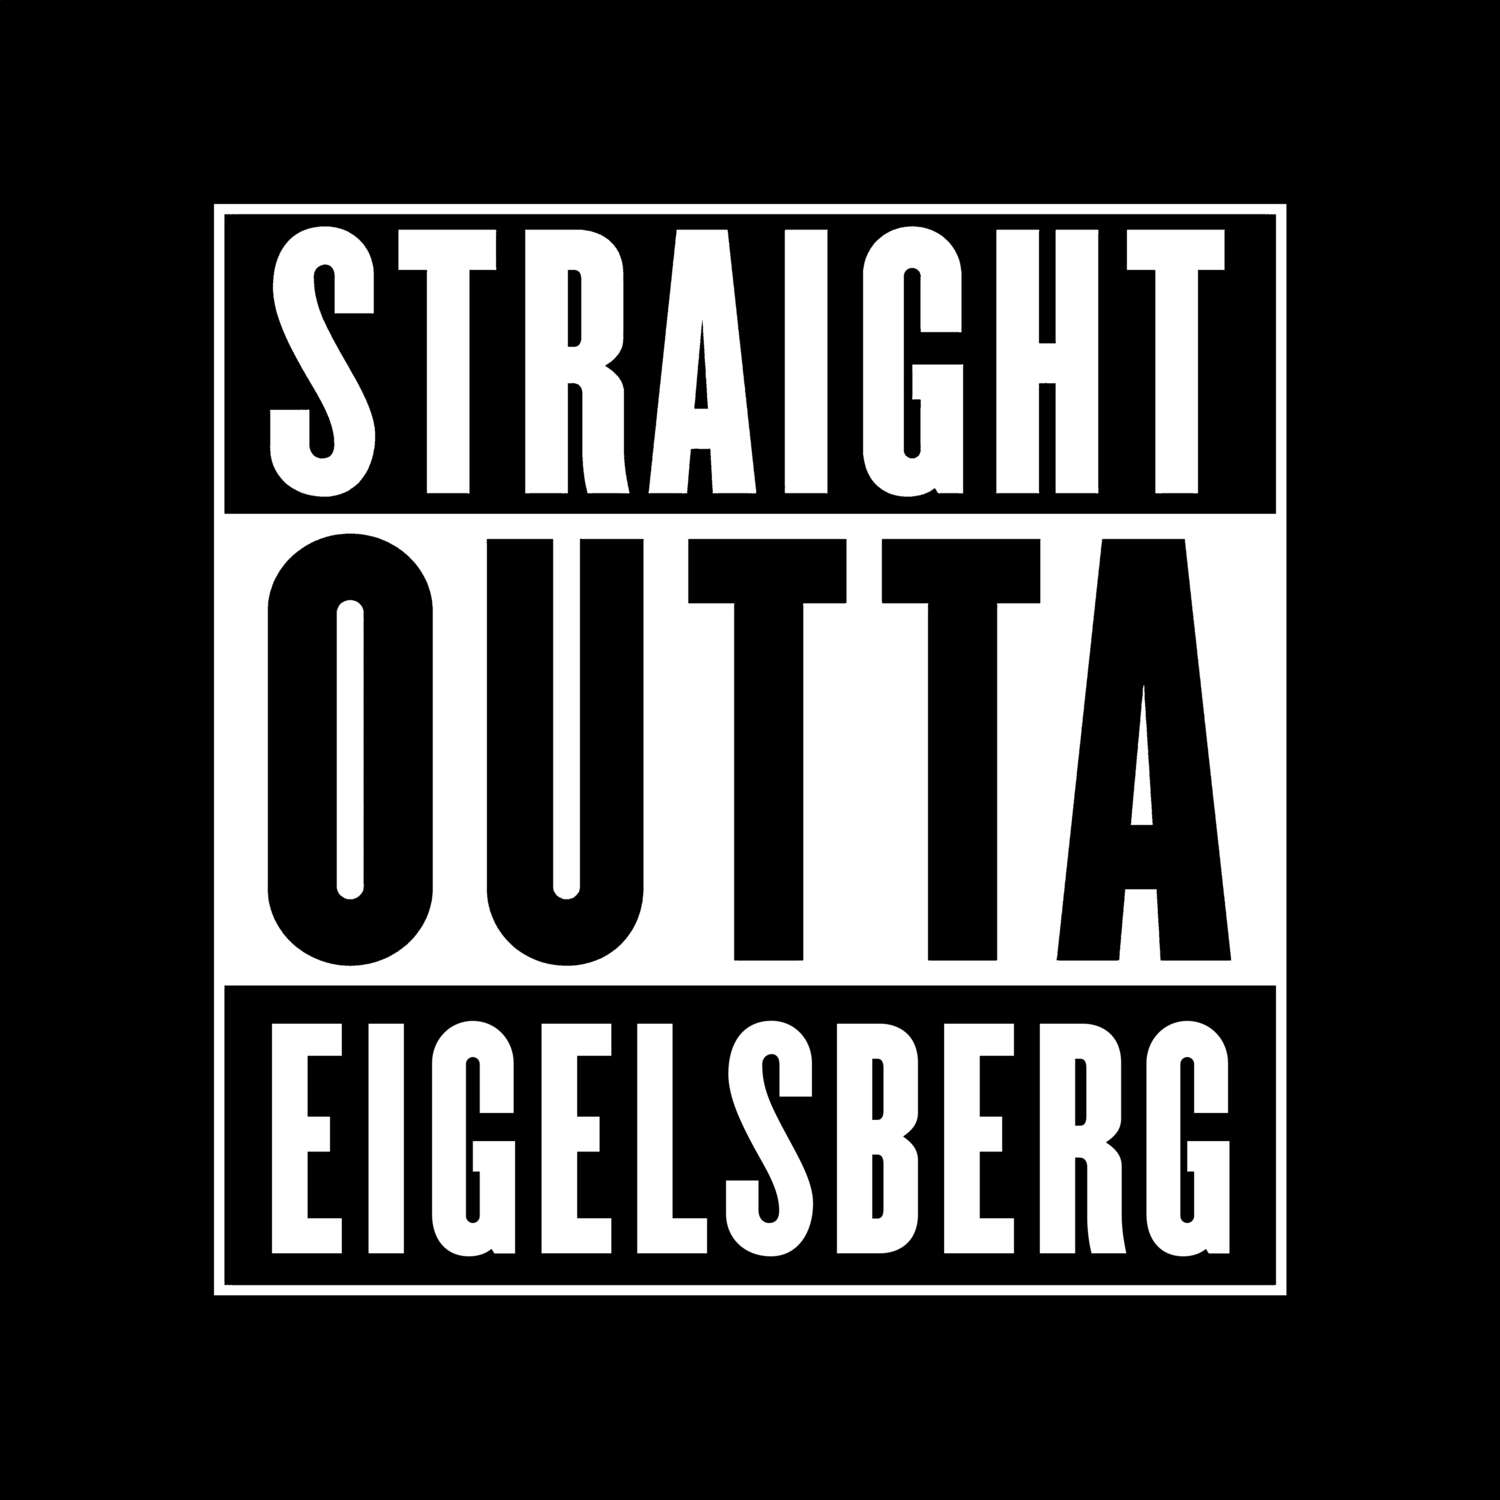 Eigelsberg T-Shirt »Straight Outta«